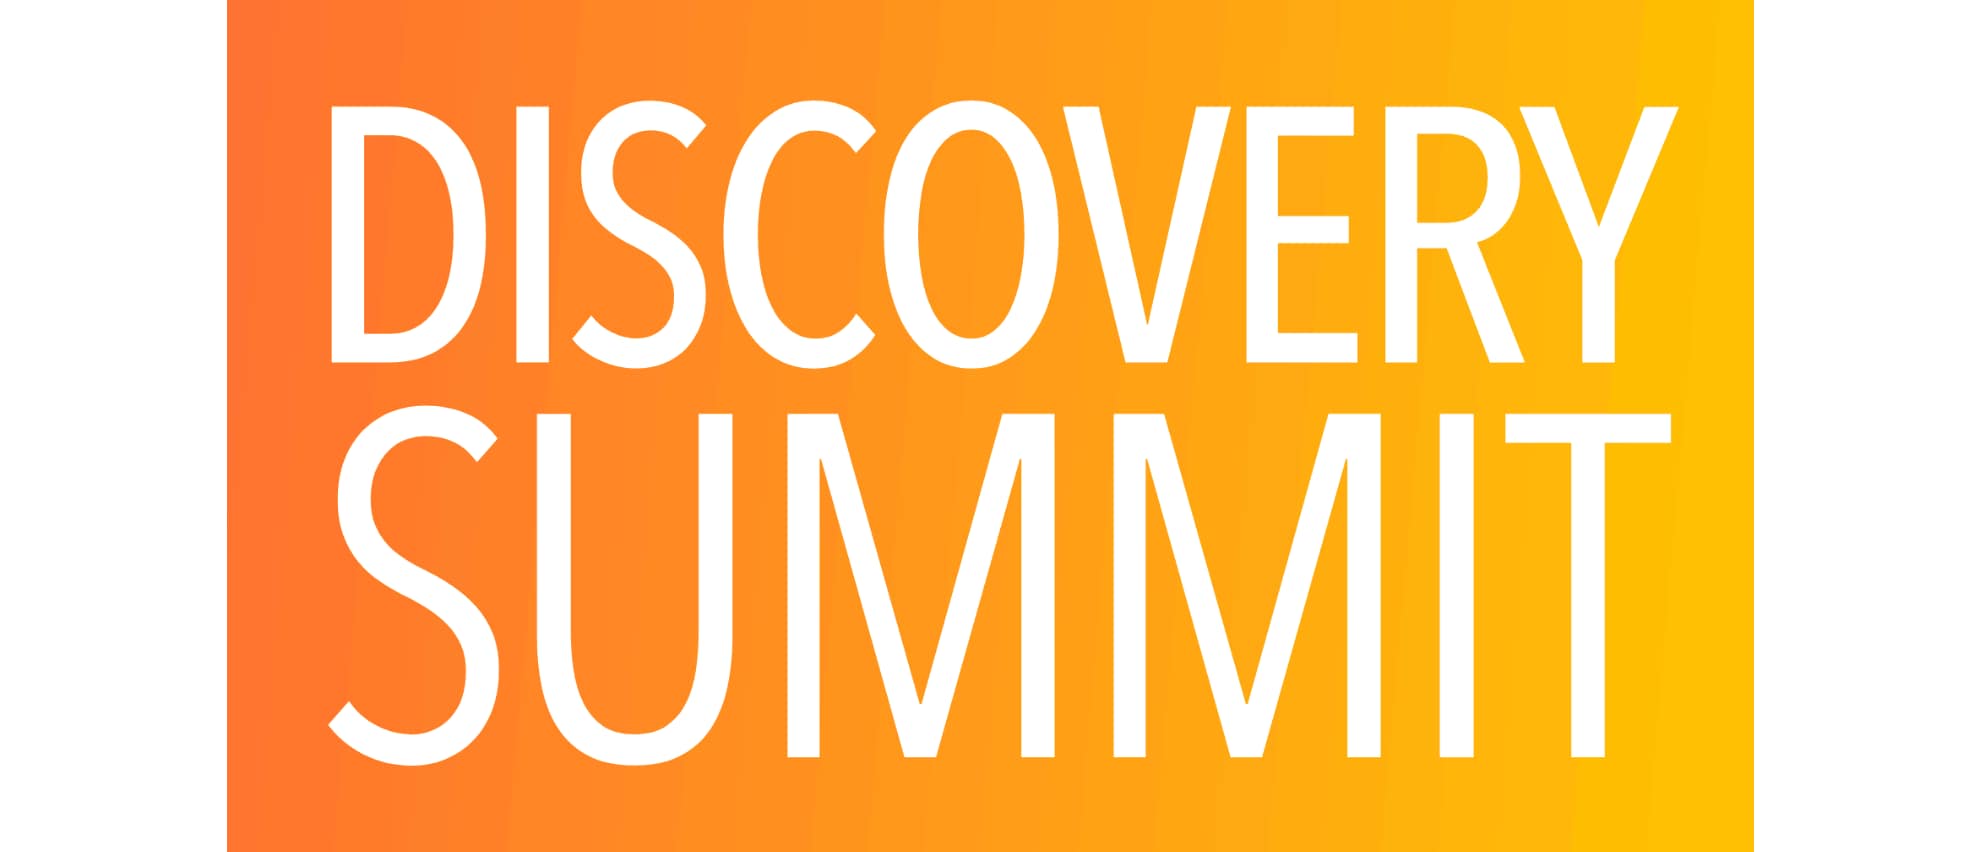 Discovery Summit Logo - Global